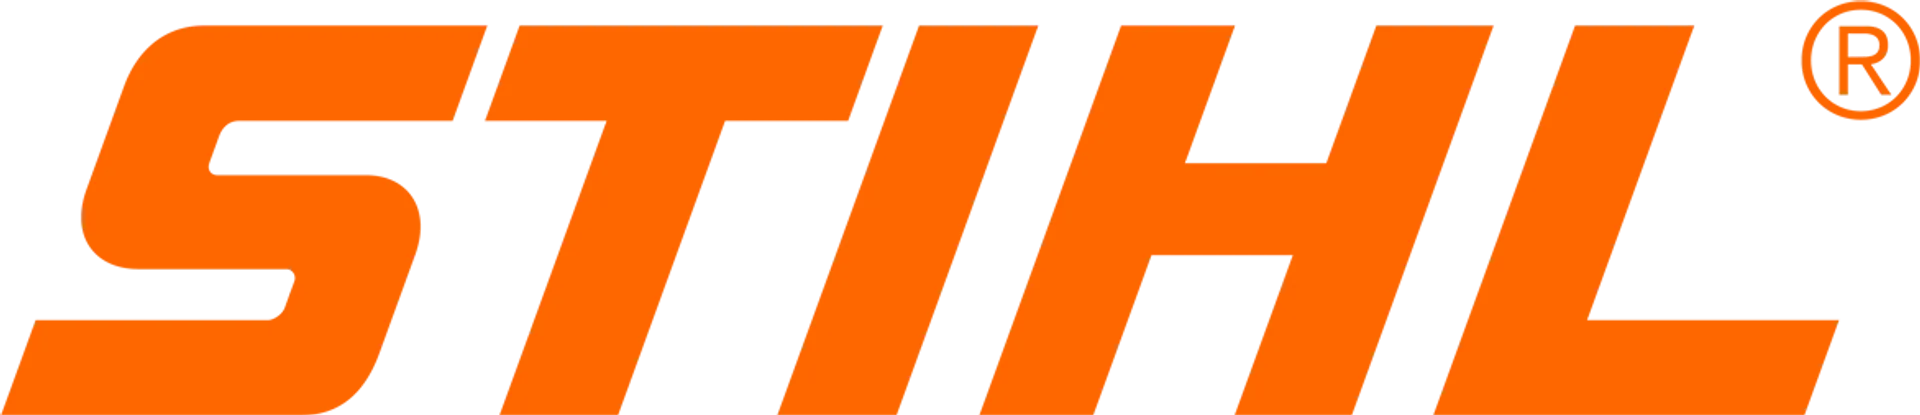 STIHL logo of current flyer